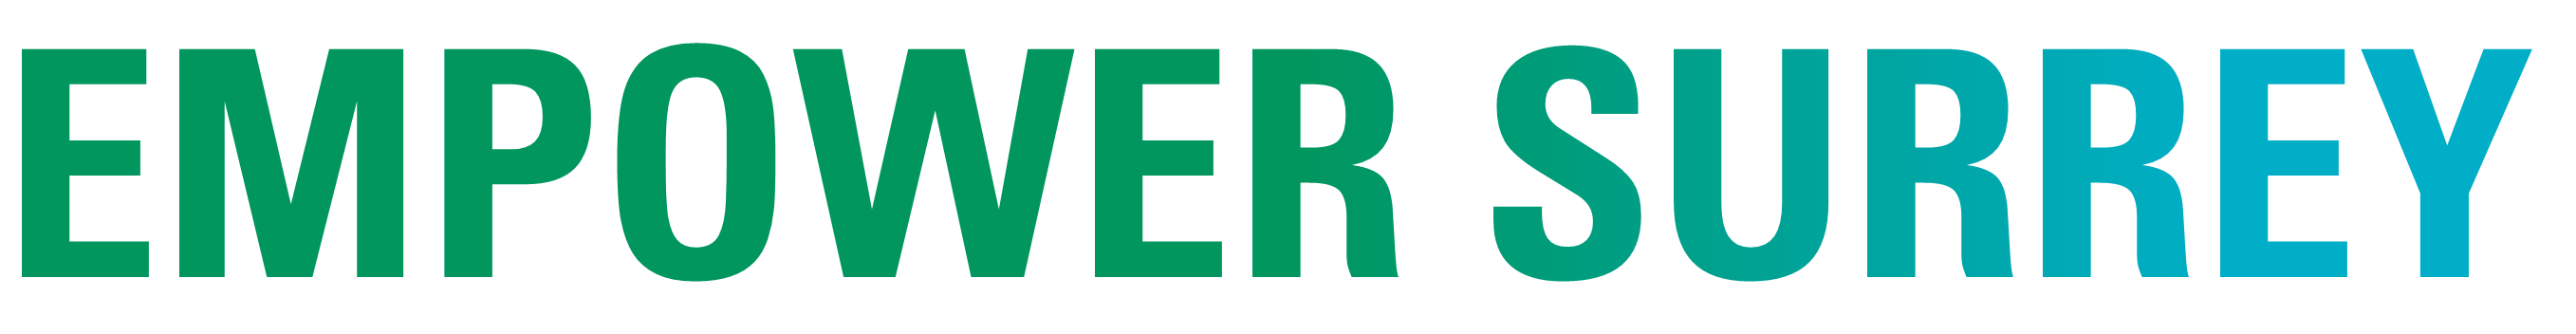 EmpowerSurrey Logo - Return to homepage